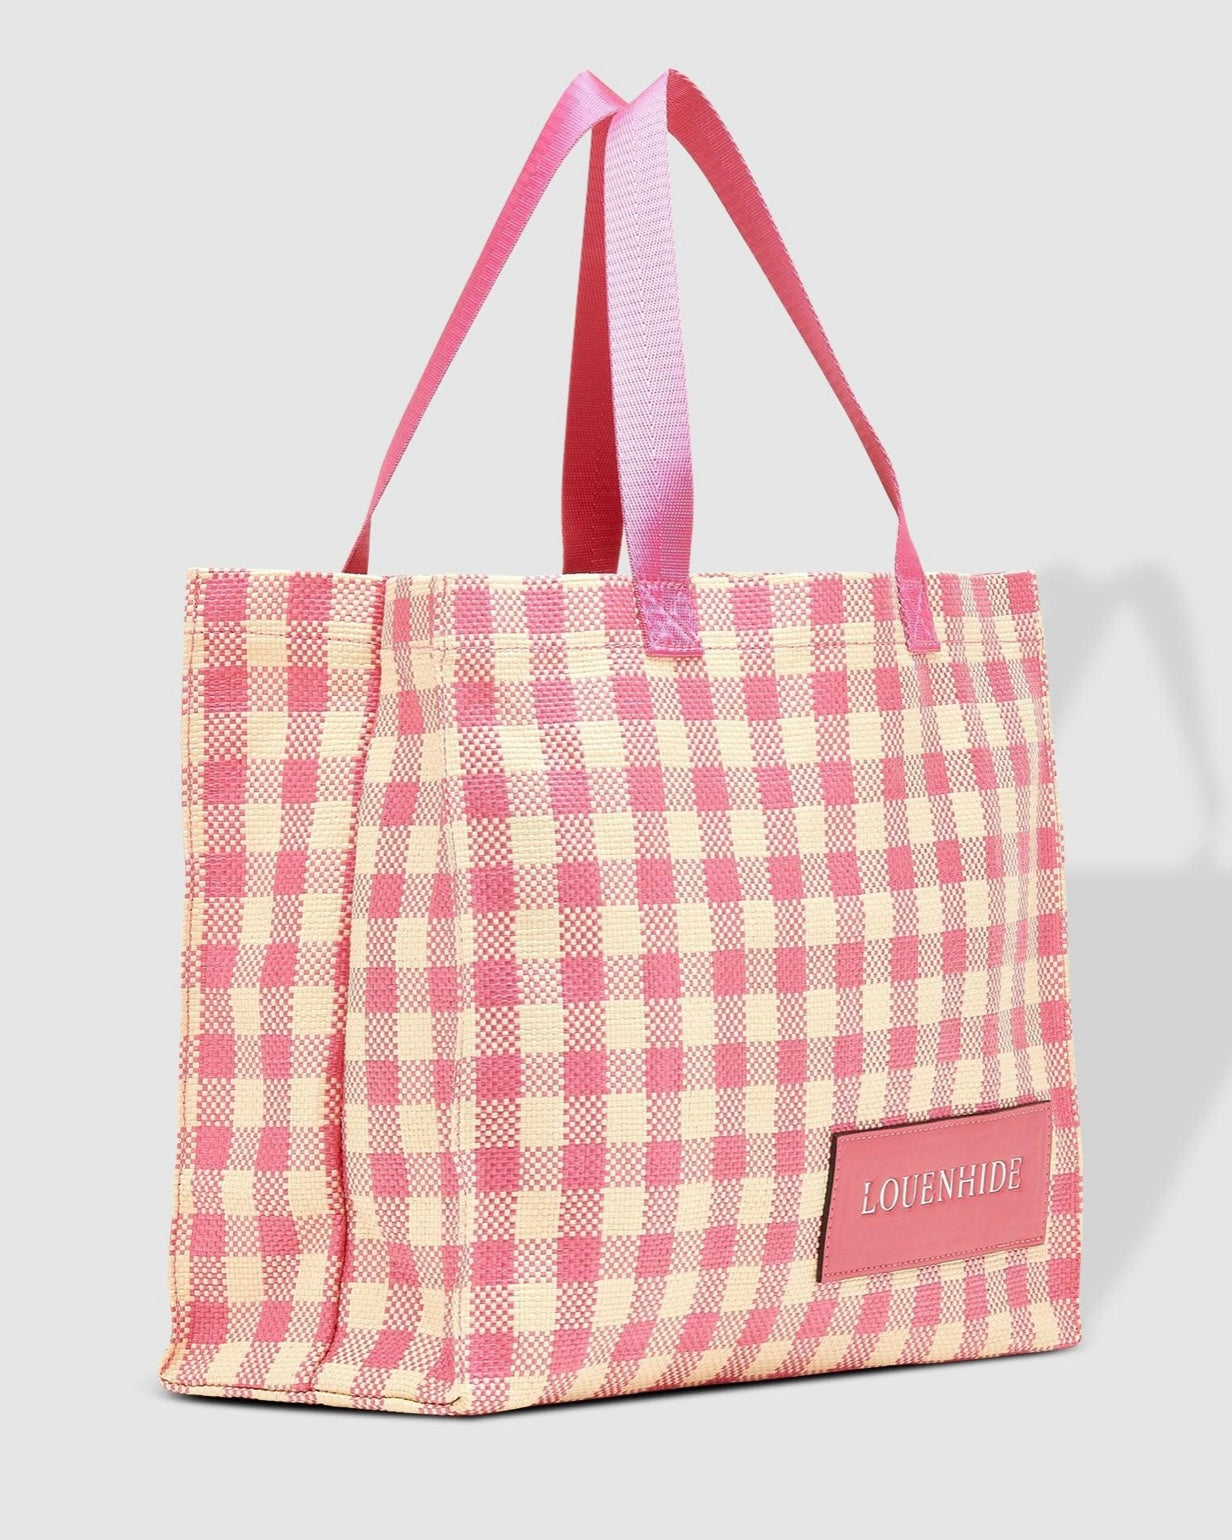 Baby Simpson Beach Bag, louenhide, carry all, shopper bag, 